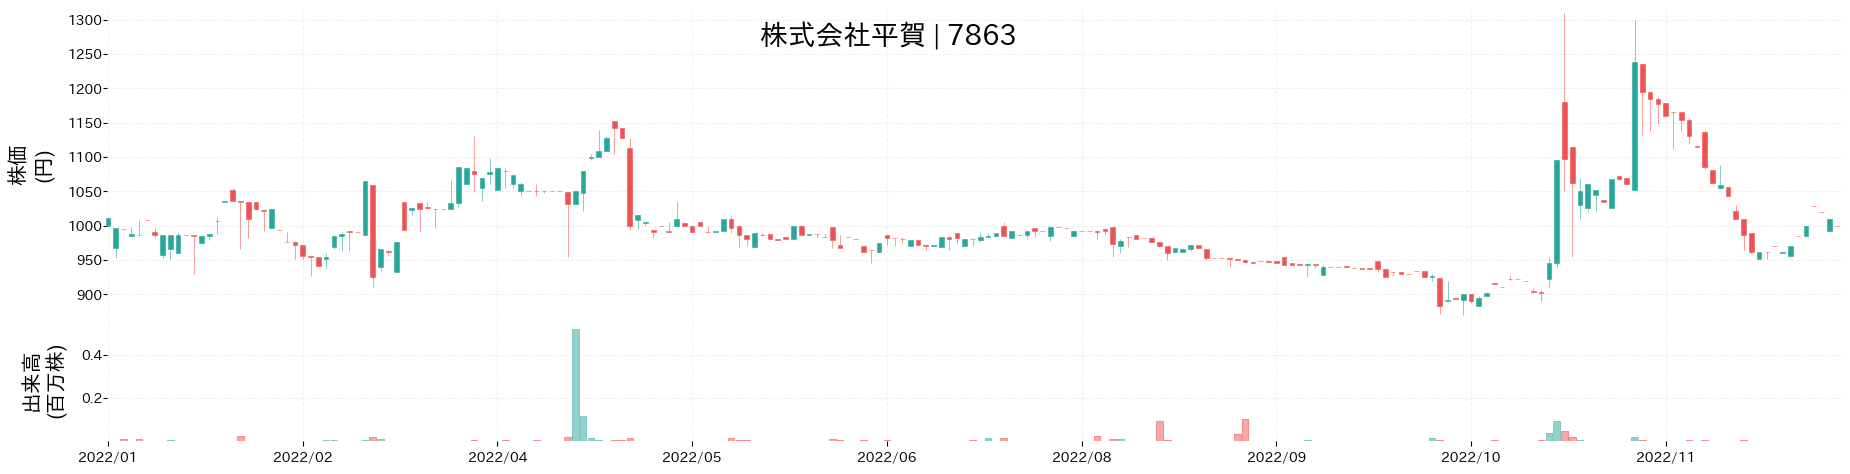 平賀の株価推移(2022)